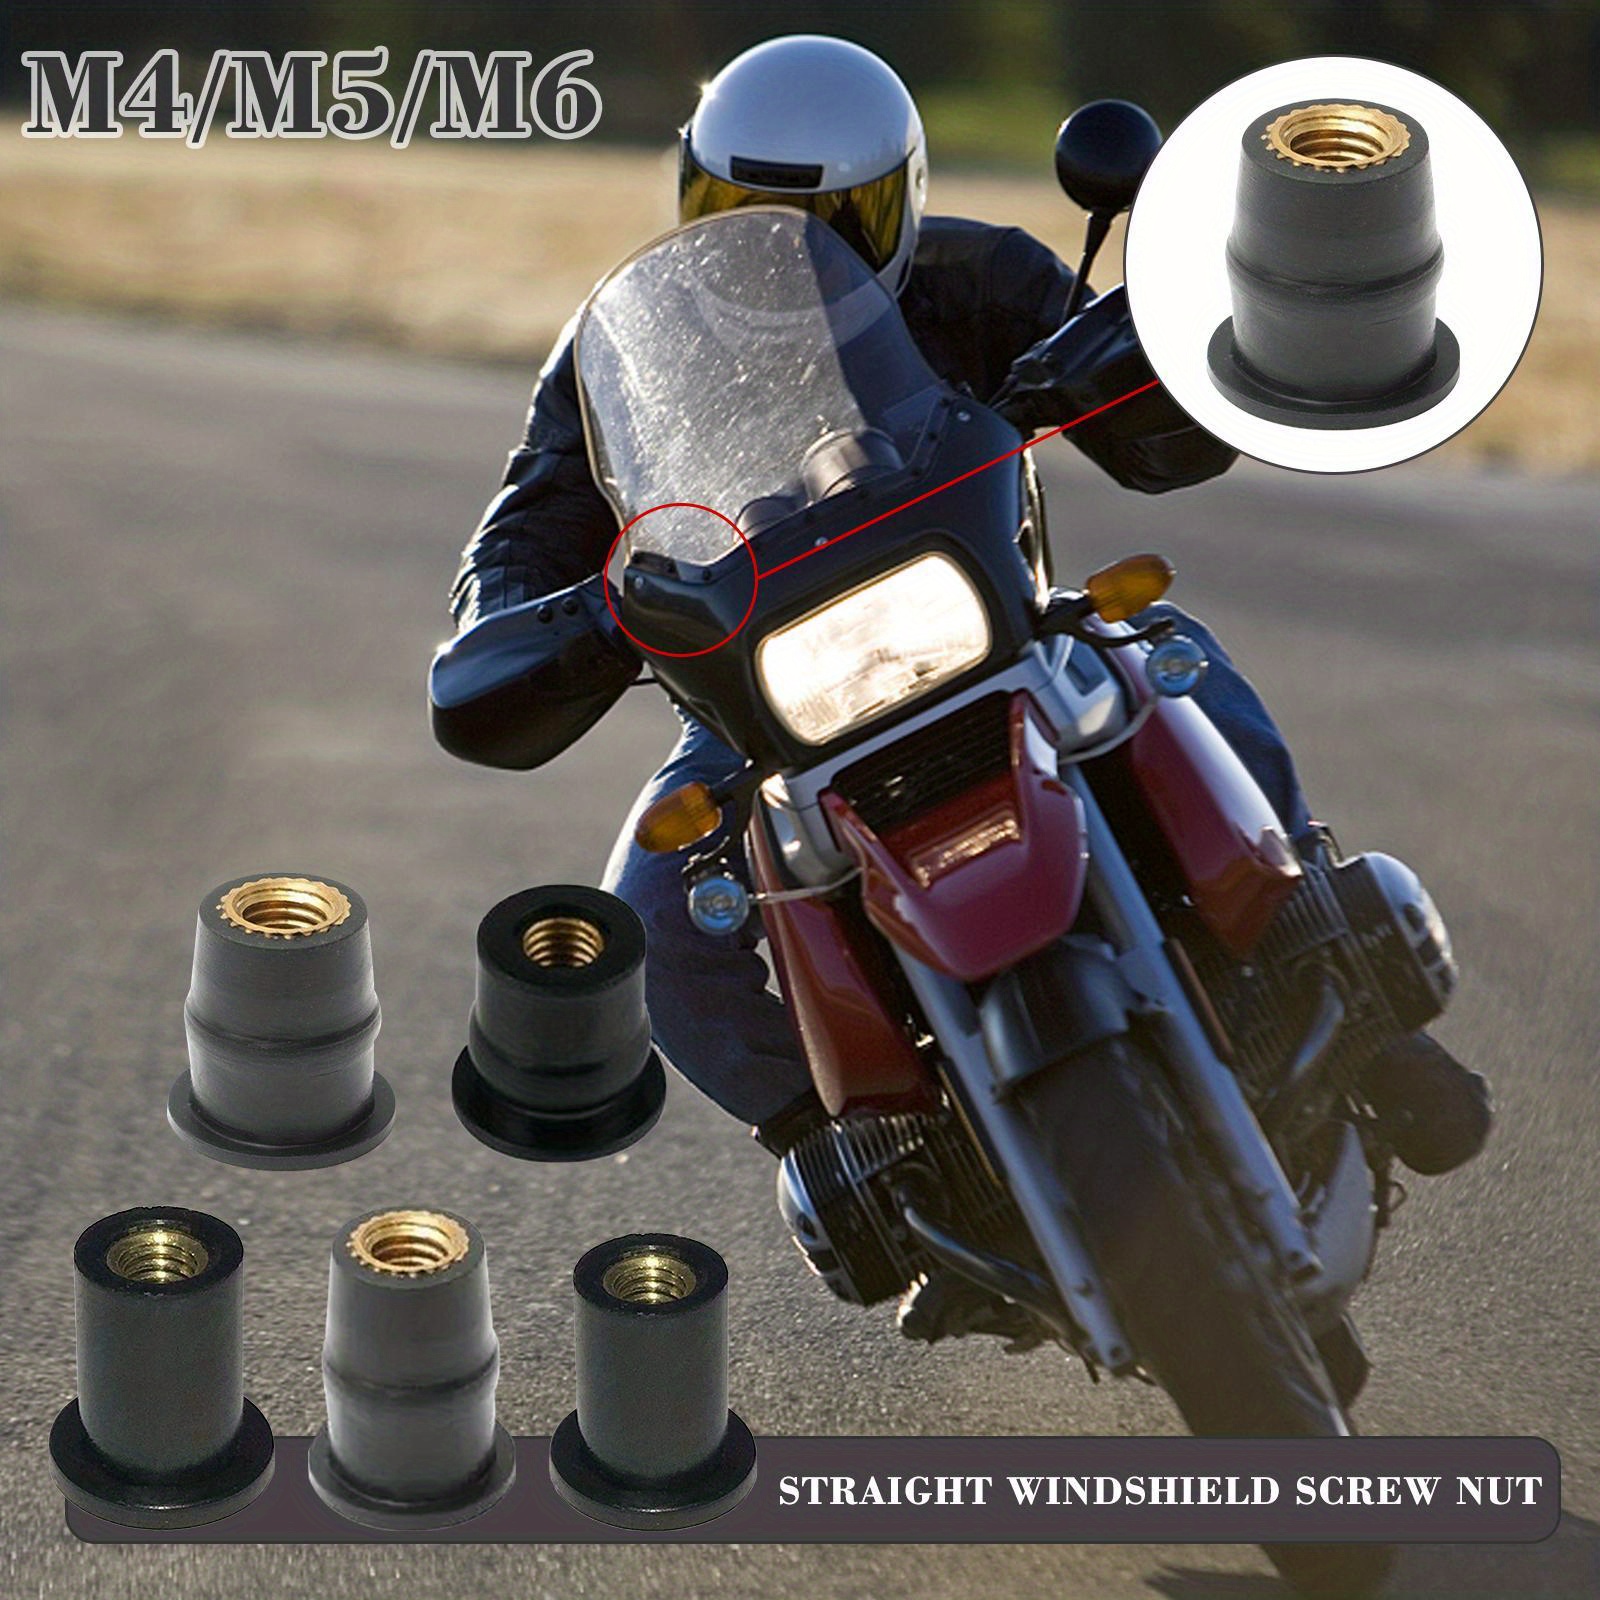 Kaufe Pdtoweb 10x Motorrad M5 5mm Metrisches  Gummi-Windschutzscheiben-Verkleidungsmutter Wellnut